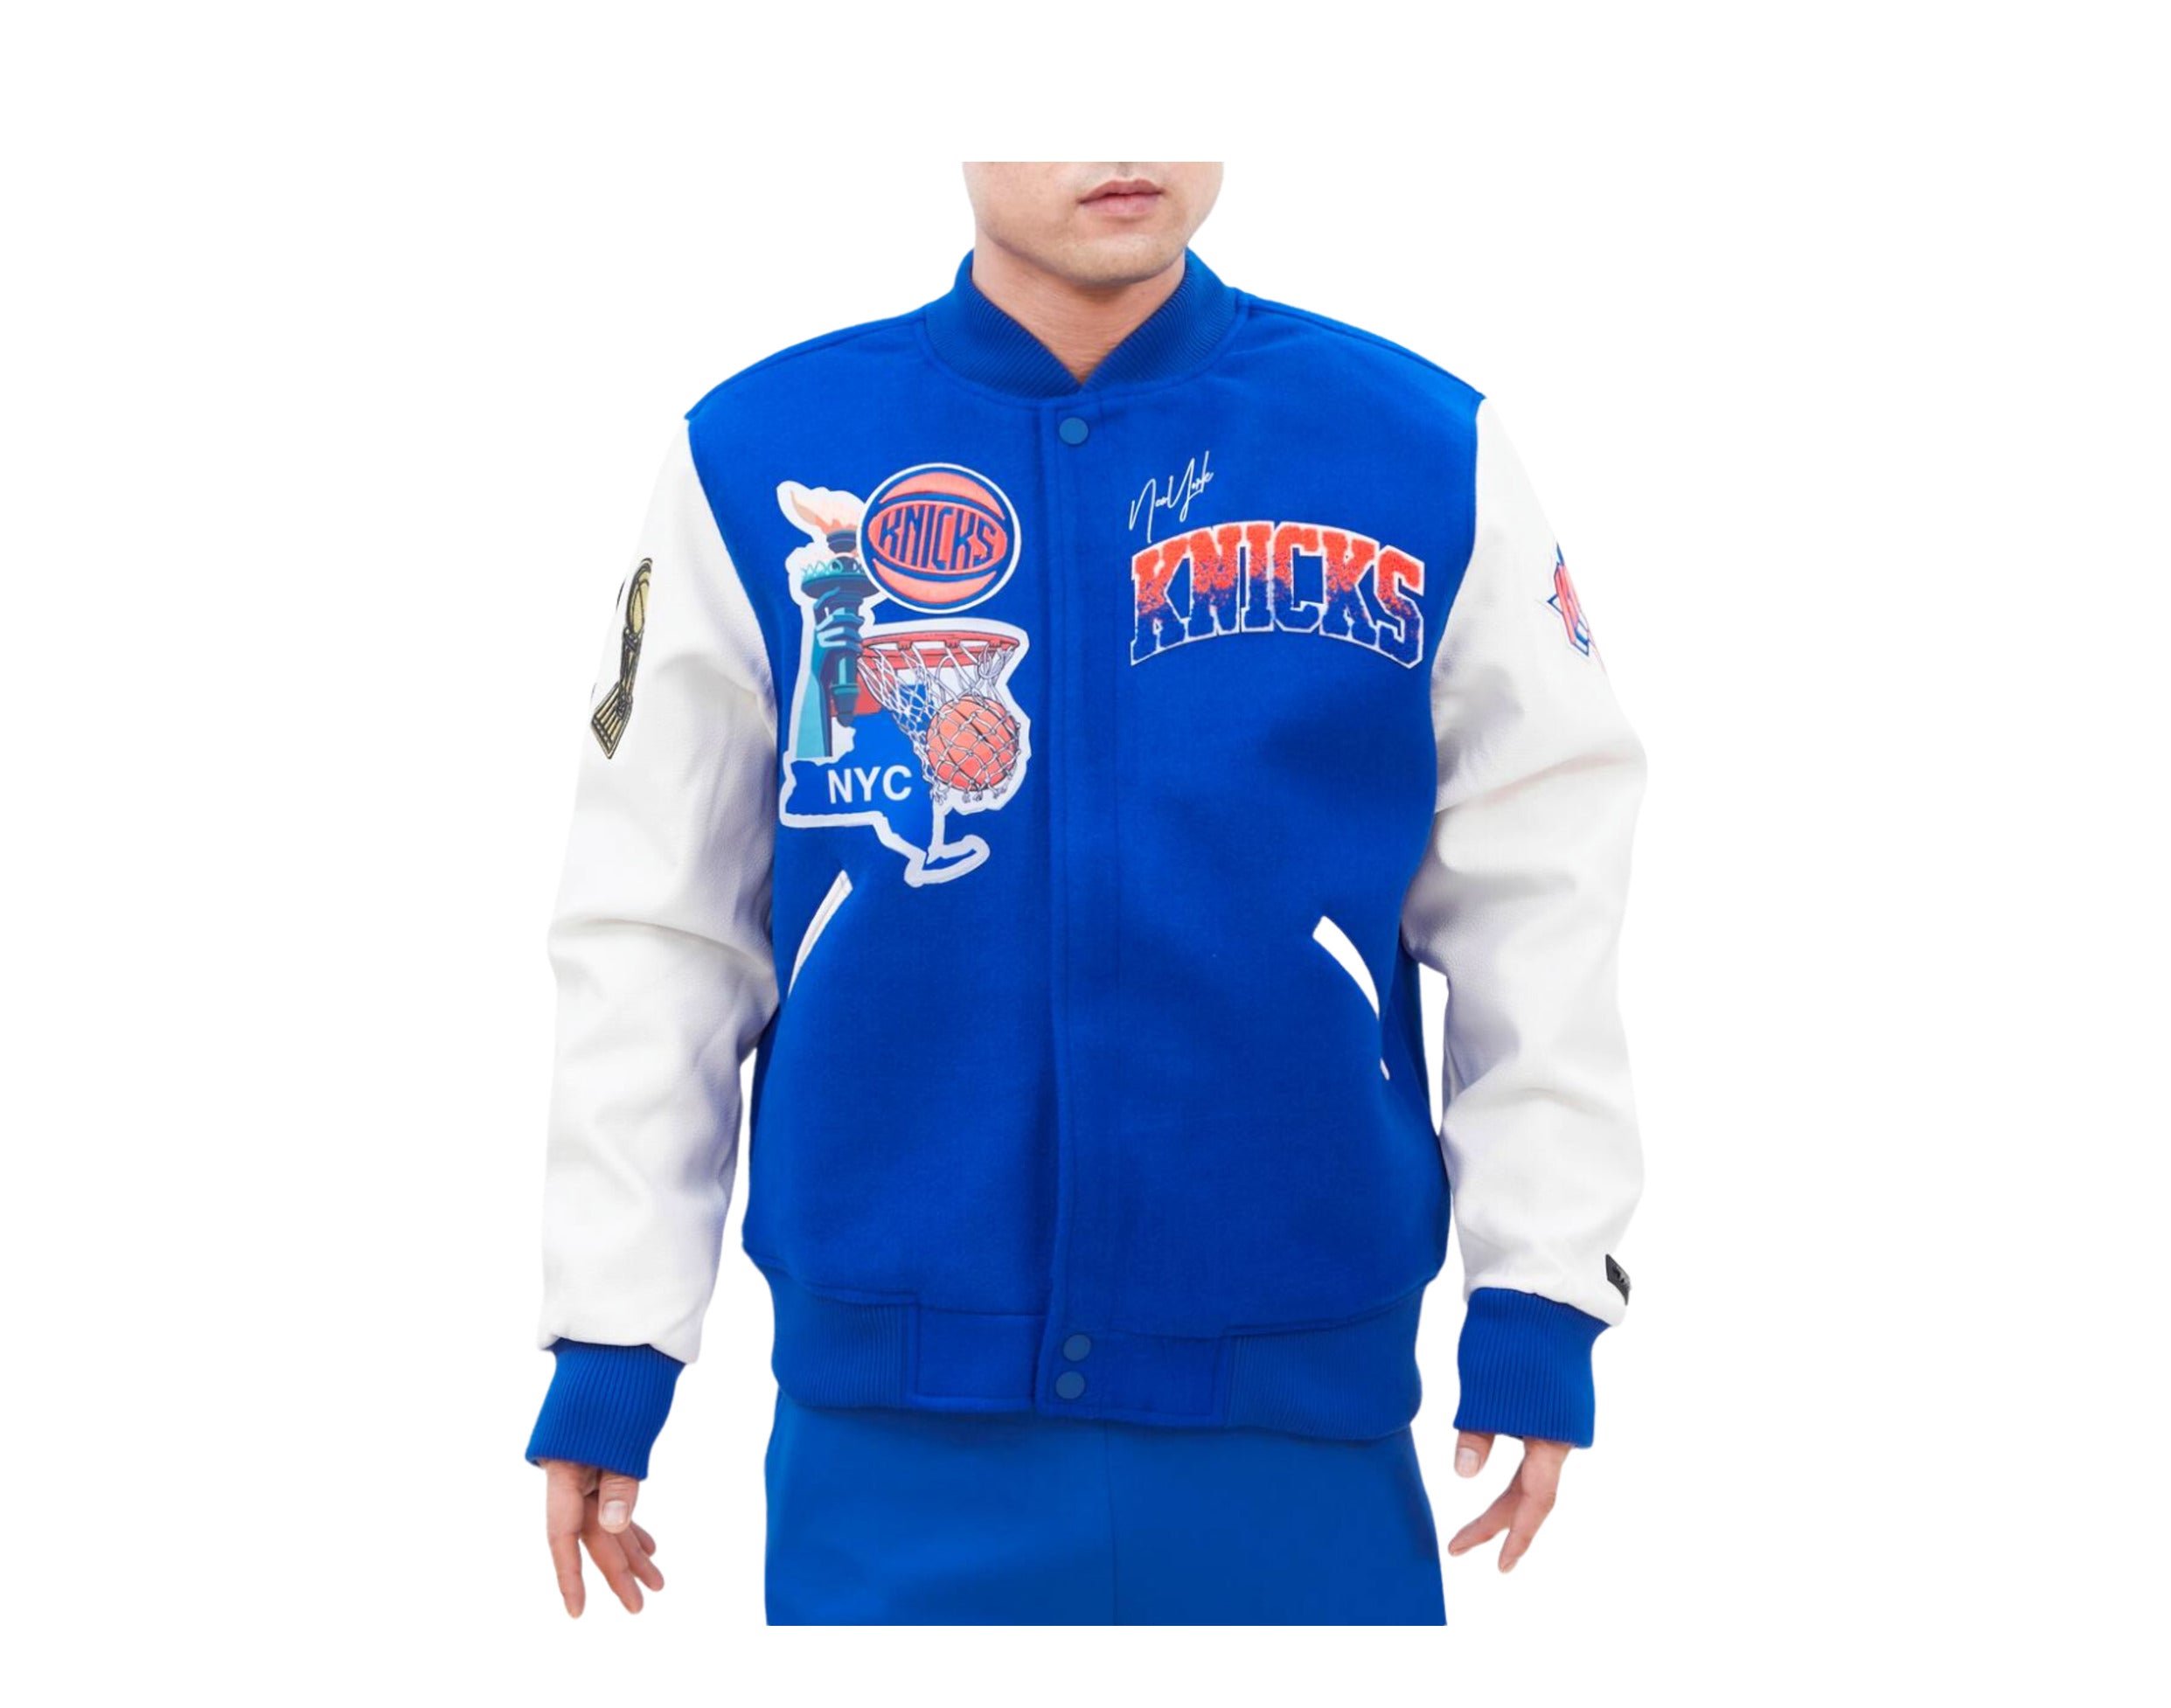 NY Islanders Letterman Jacket